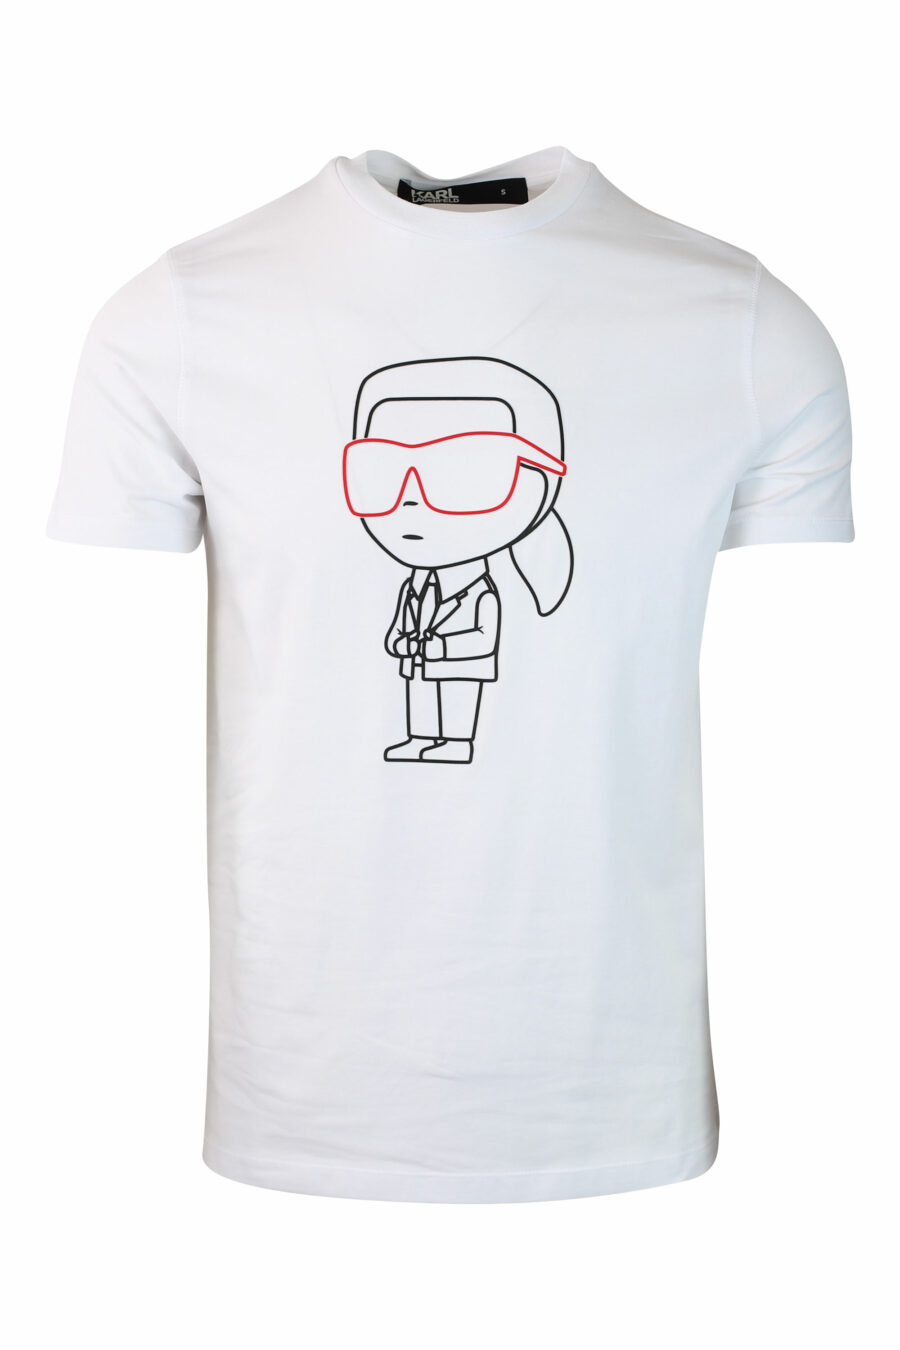 T-shirt branca com silhueta maxilogo "karl" - IMG 0120